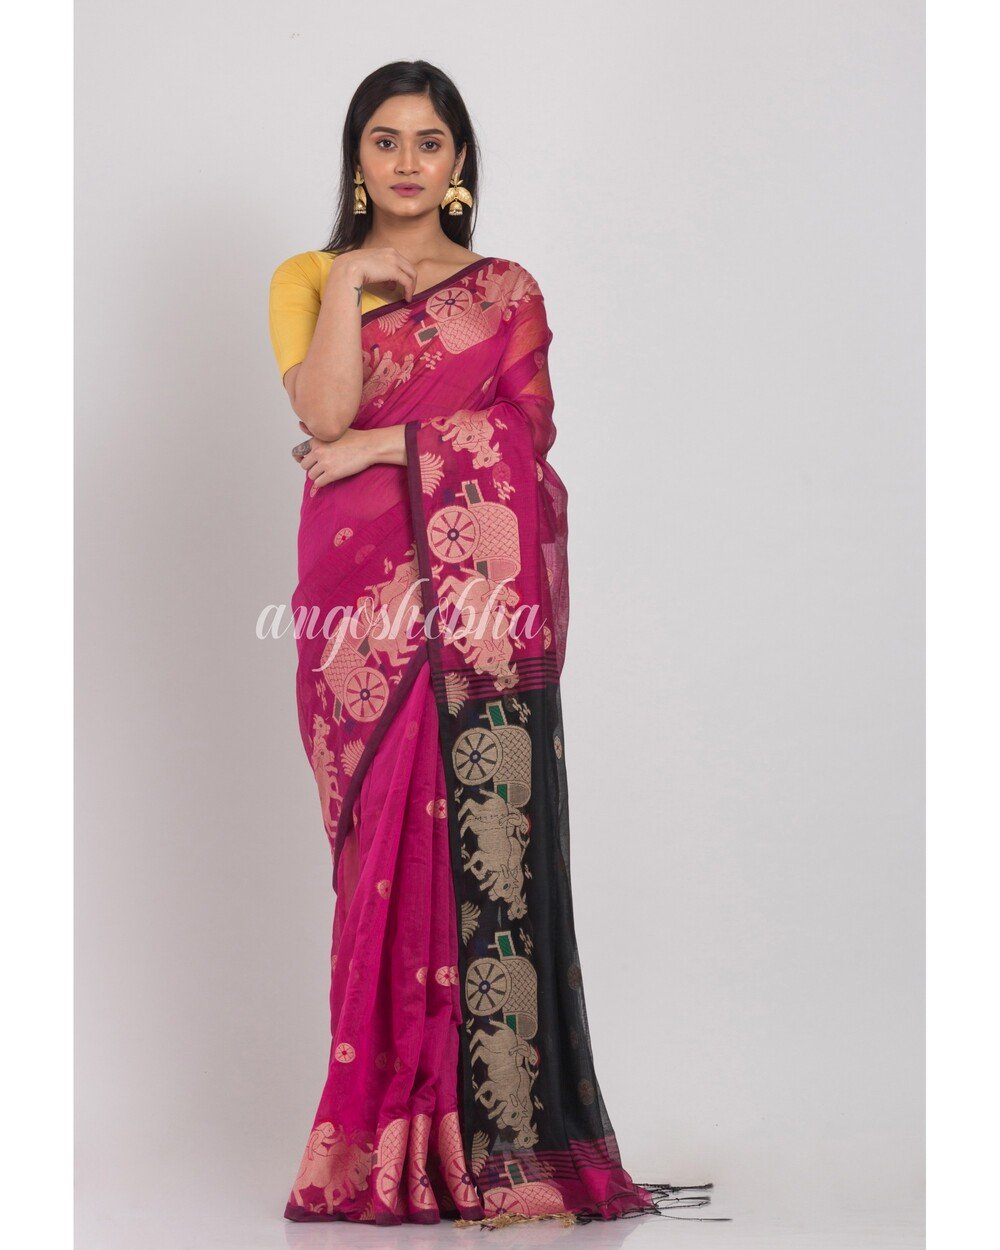 Women's Pink Handloom Cotton Silk Saree - Angoshobha